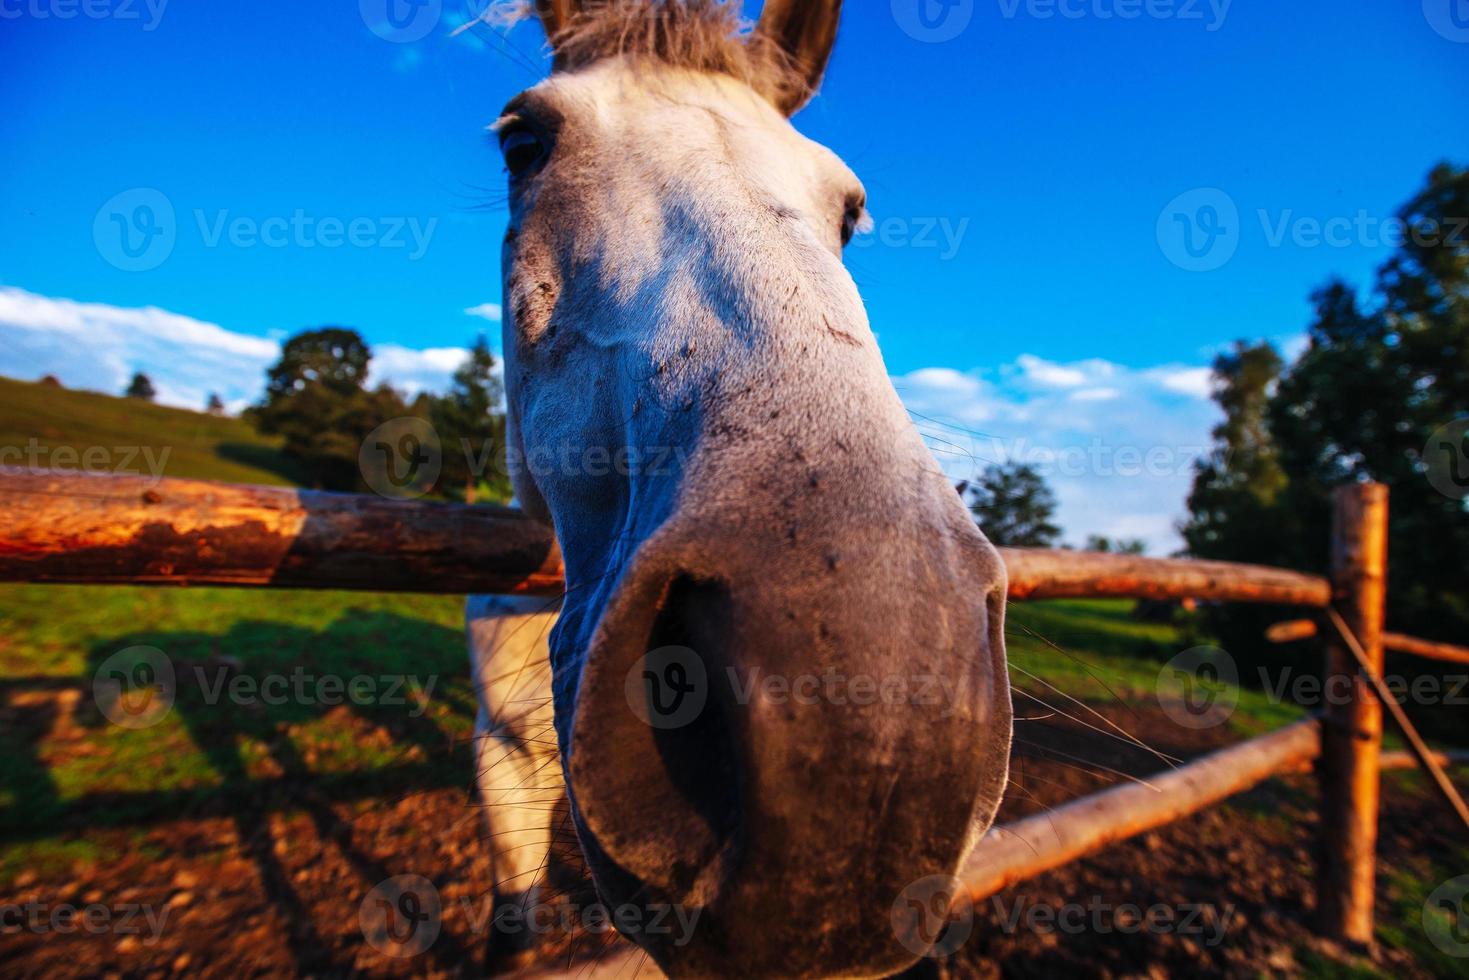 grappig paard close-up foto